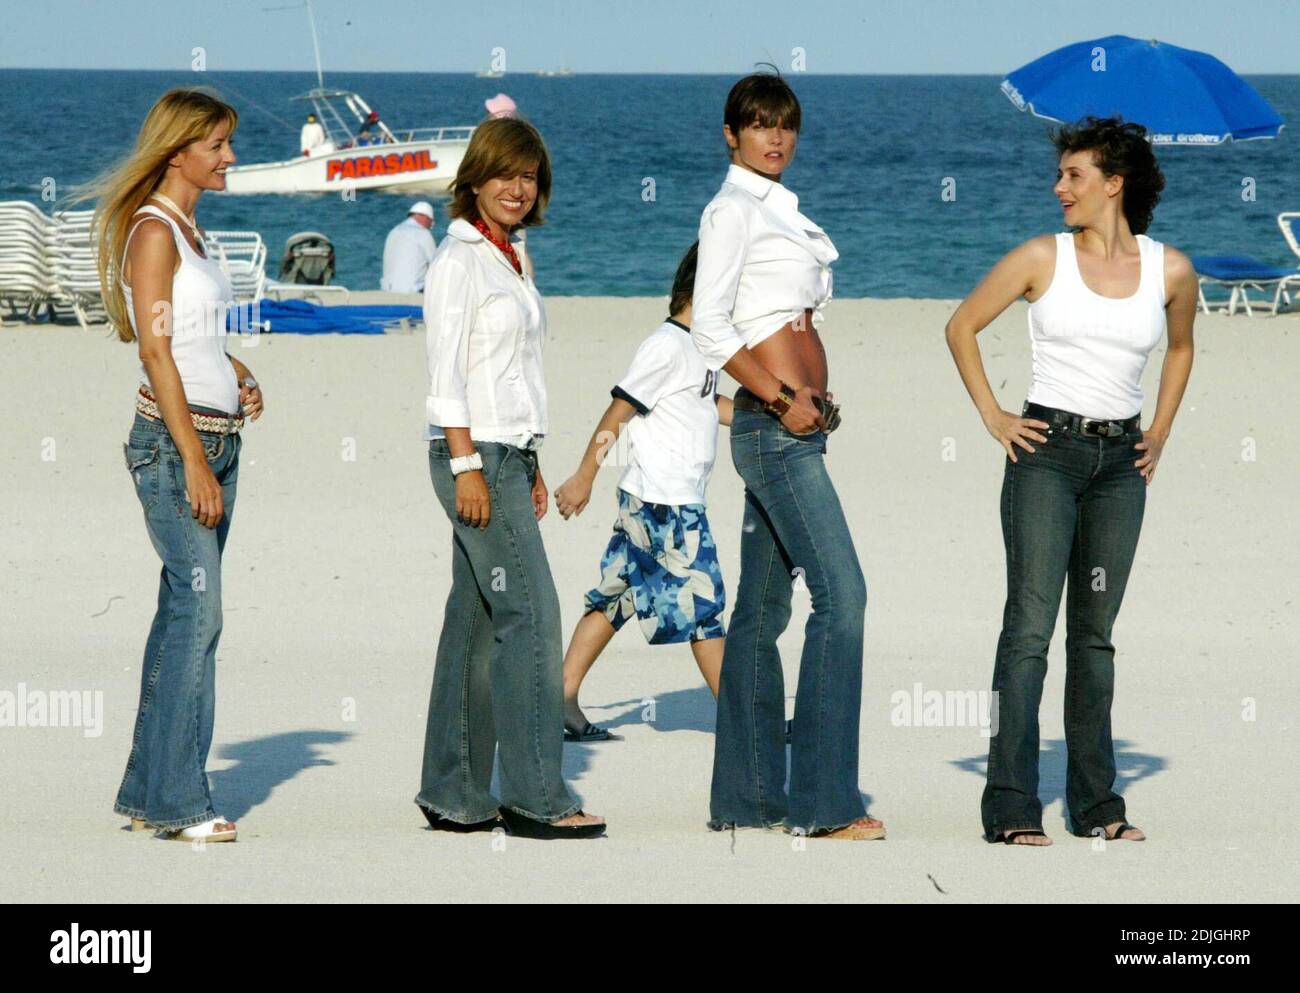 Exclusive!! Araceli Gonzalez, Carola Reyna, Gabriela Toscano and Mercedes Moran from Argentinian TV program 'Housewives', pose for a photo shoot on Miami Beach, FL, 2/23/06 Stock Photo